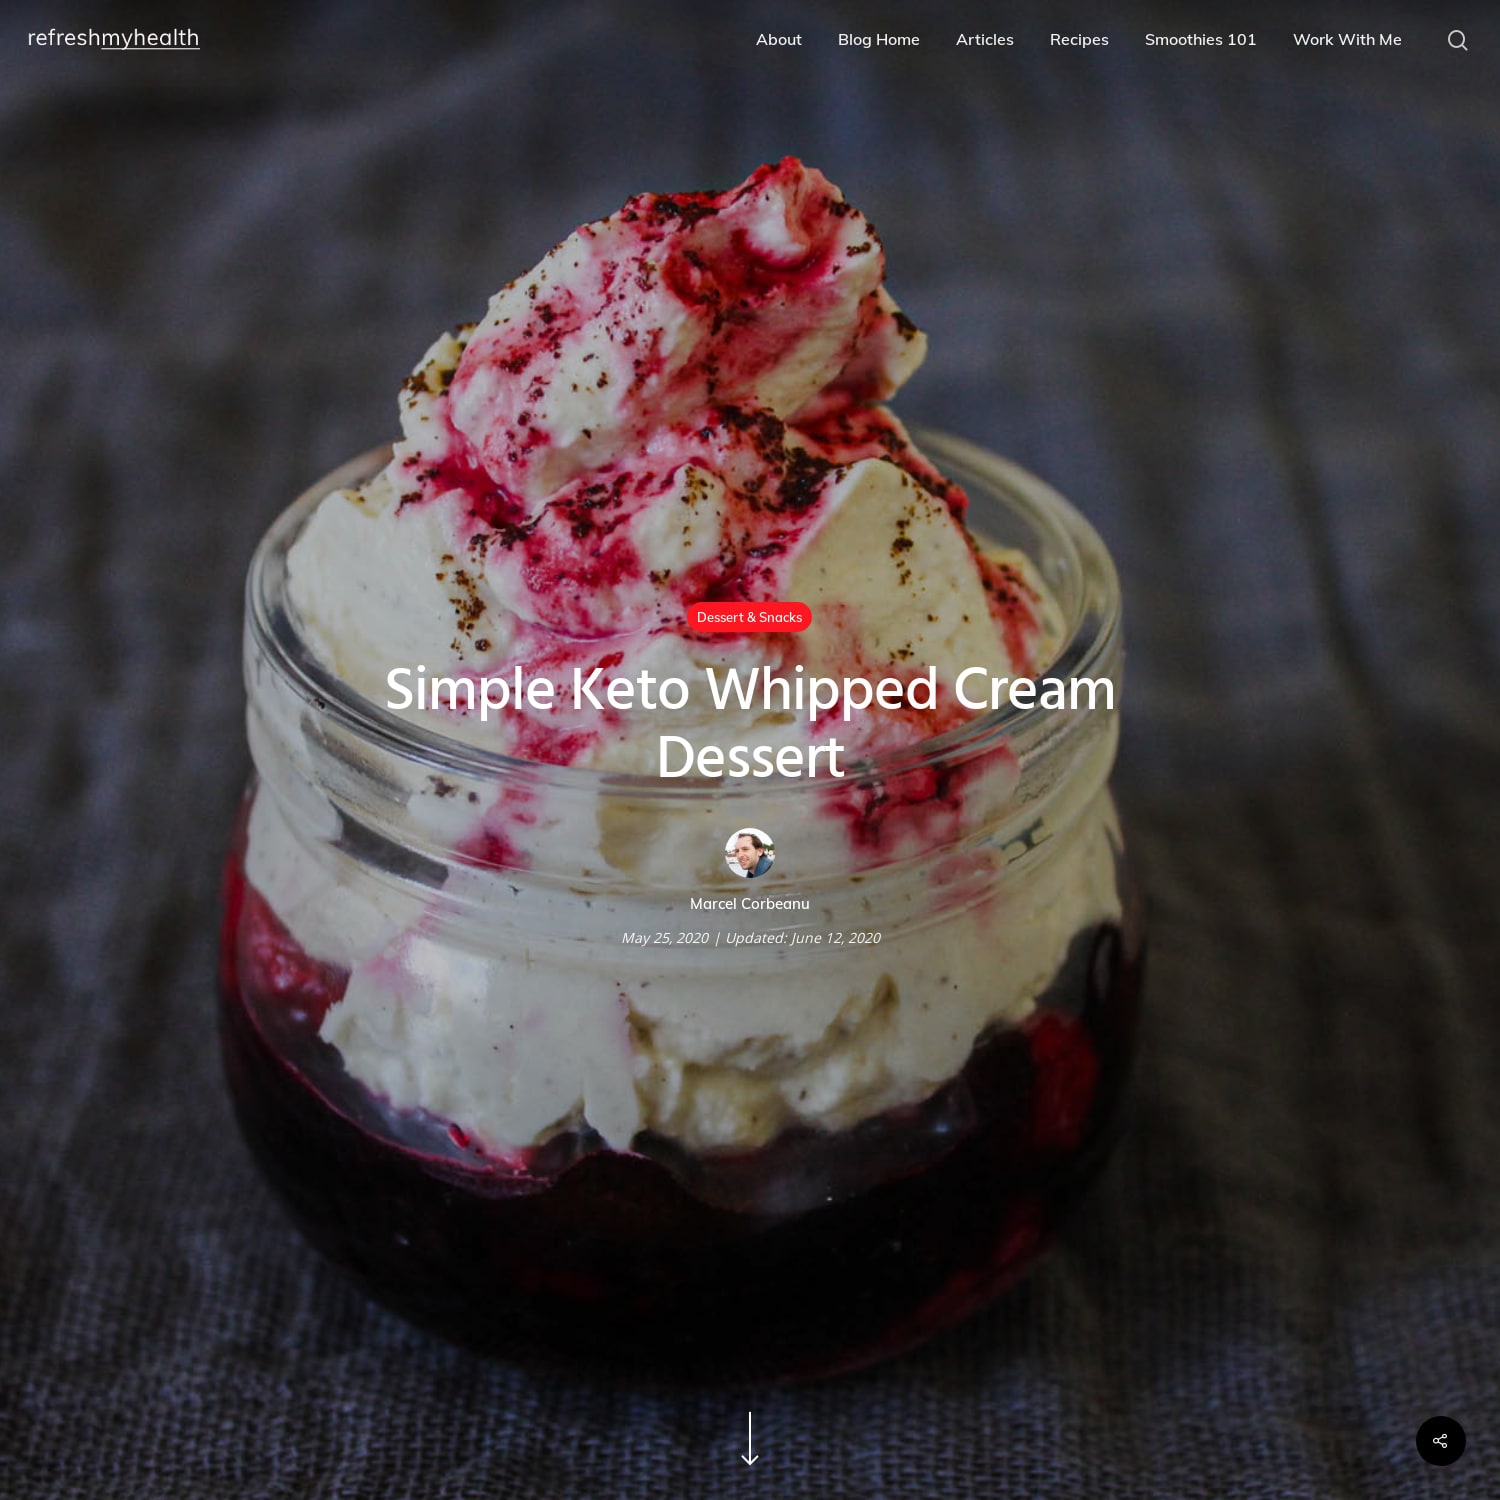 Simple Keto Whipped Cream Dessert